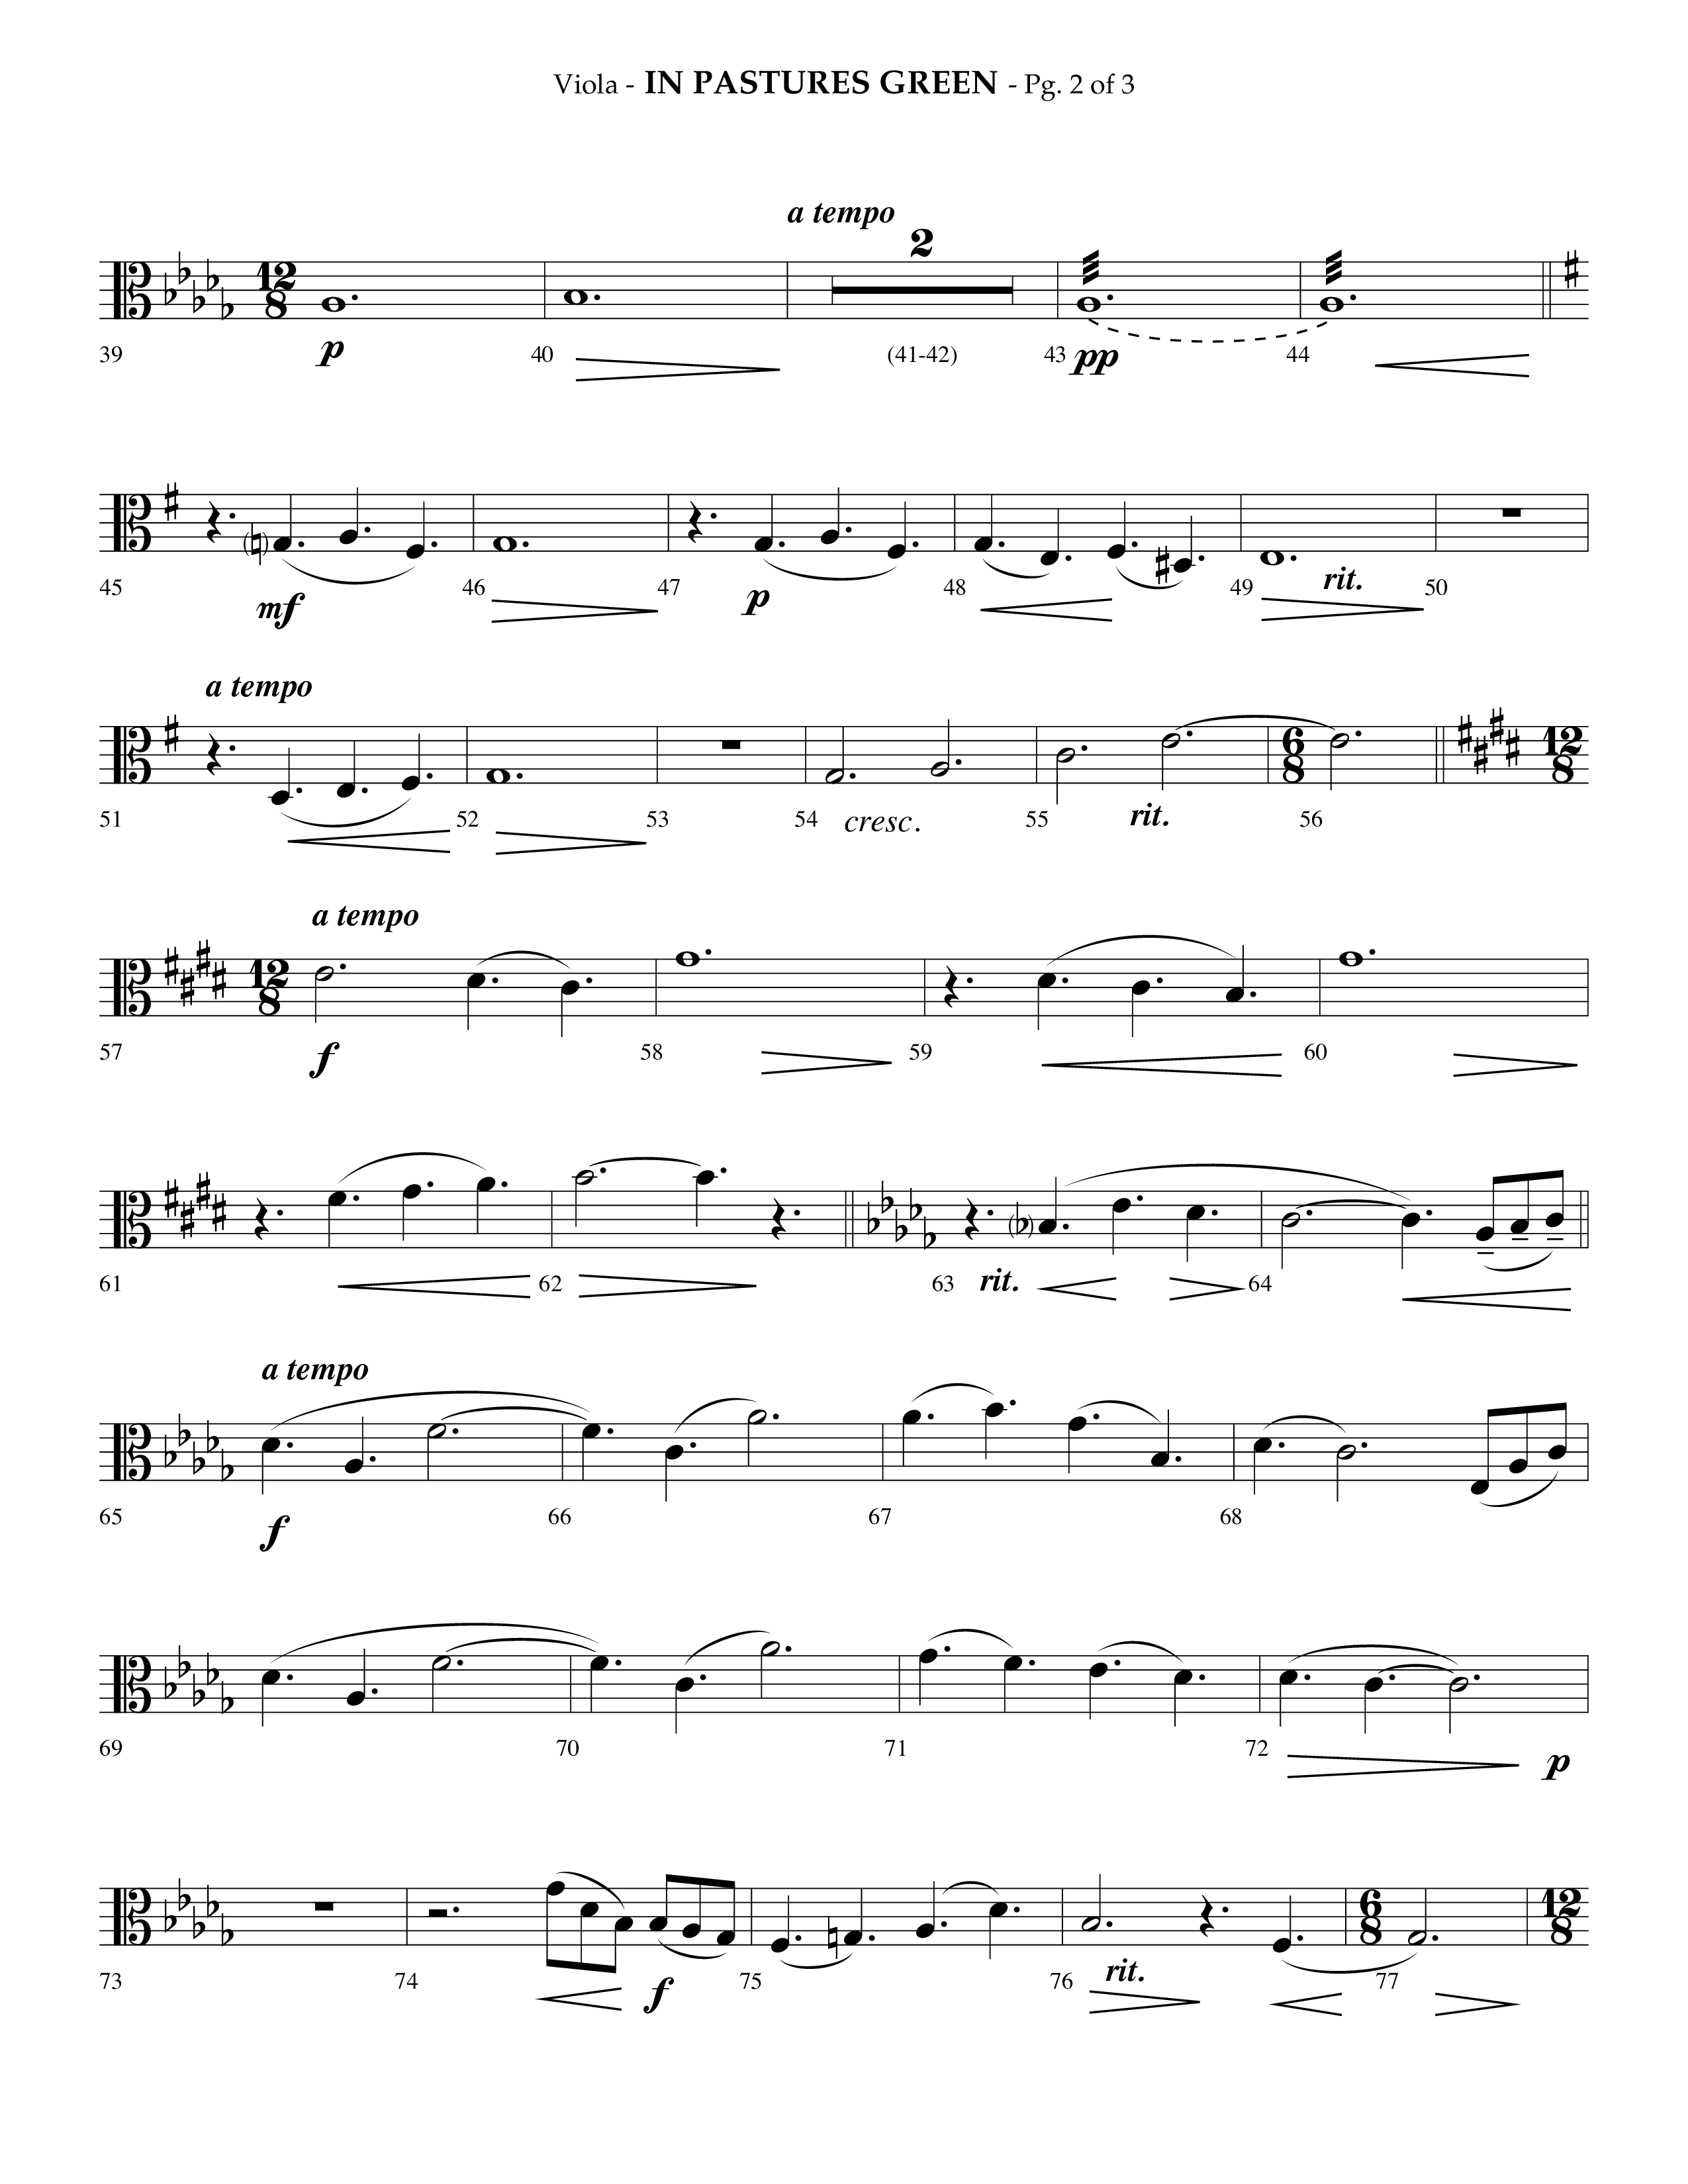 In Pastures Green (Choral Anthem SATB) Viola (Lifeway Choral / Arr. Phillip Keveren)